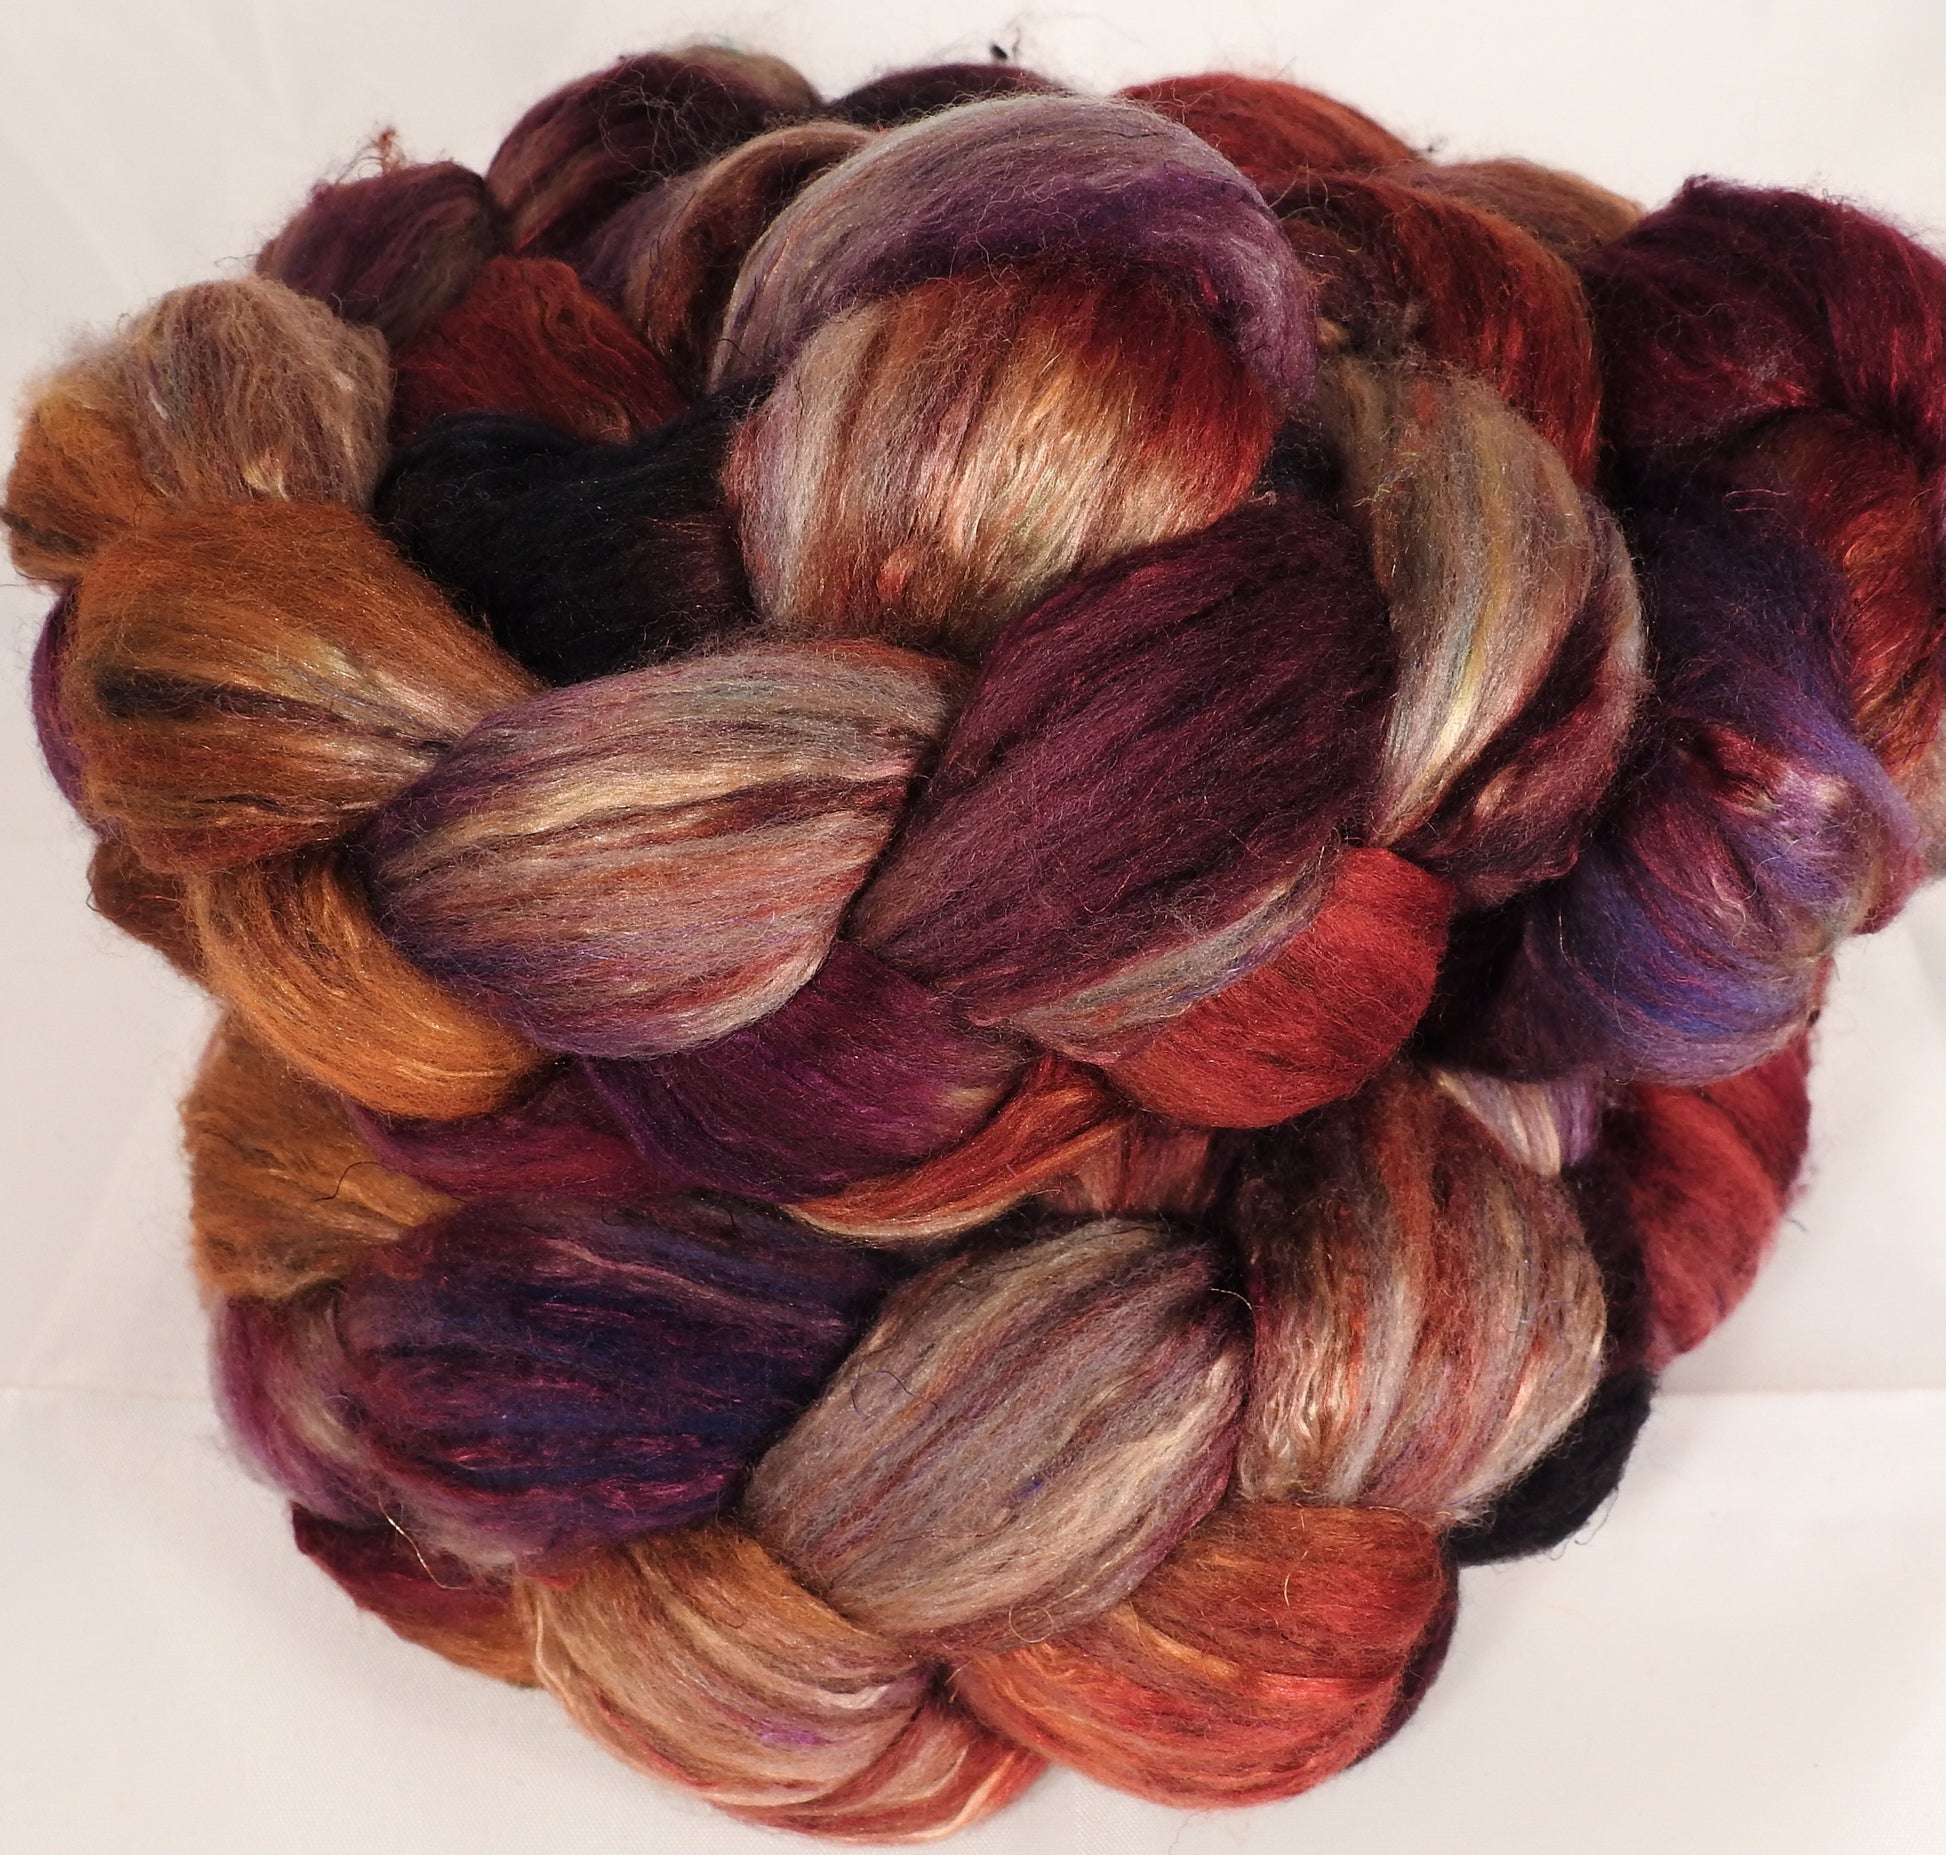 Batt in a Braid #39-SARI-28-(4.6 oz.)Falkland Merino/ Mulberry Silk / Sari Silk (50/25/25) - Inglenook Fibers